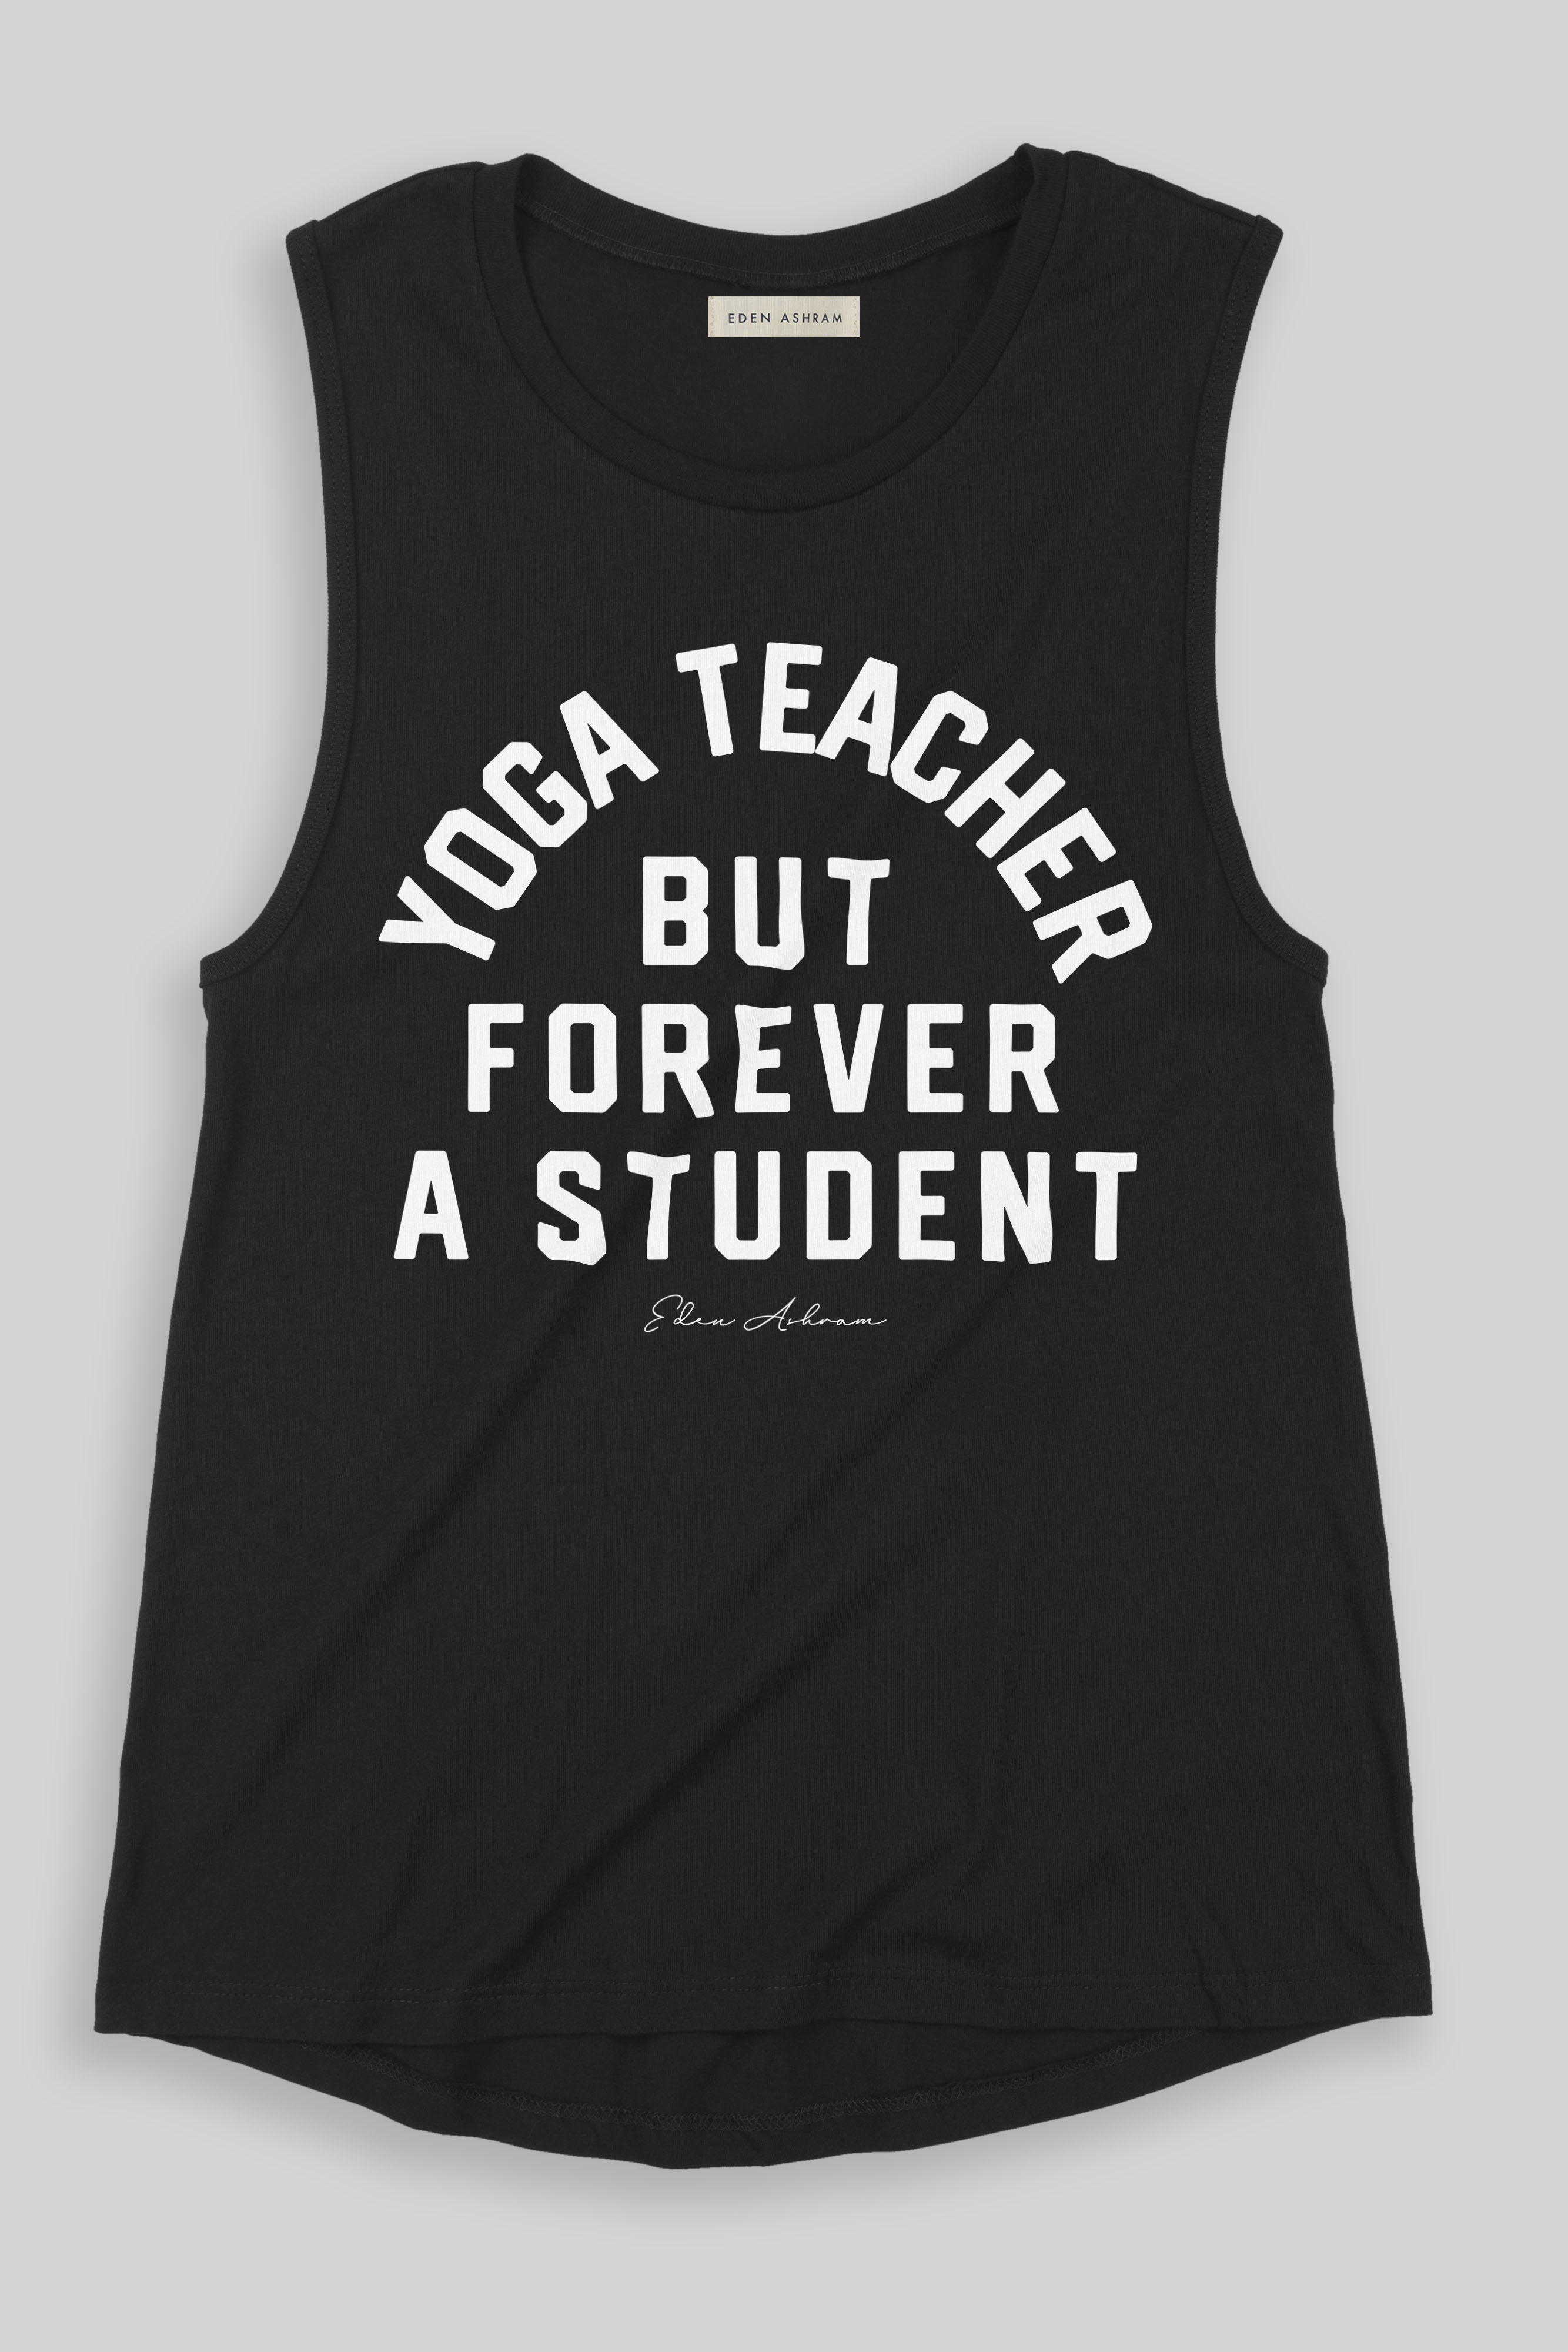 EDEN ASHRAM Yoga Teacher But Forever A Student Jersey Muscle Tank Black